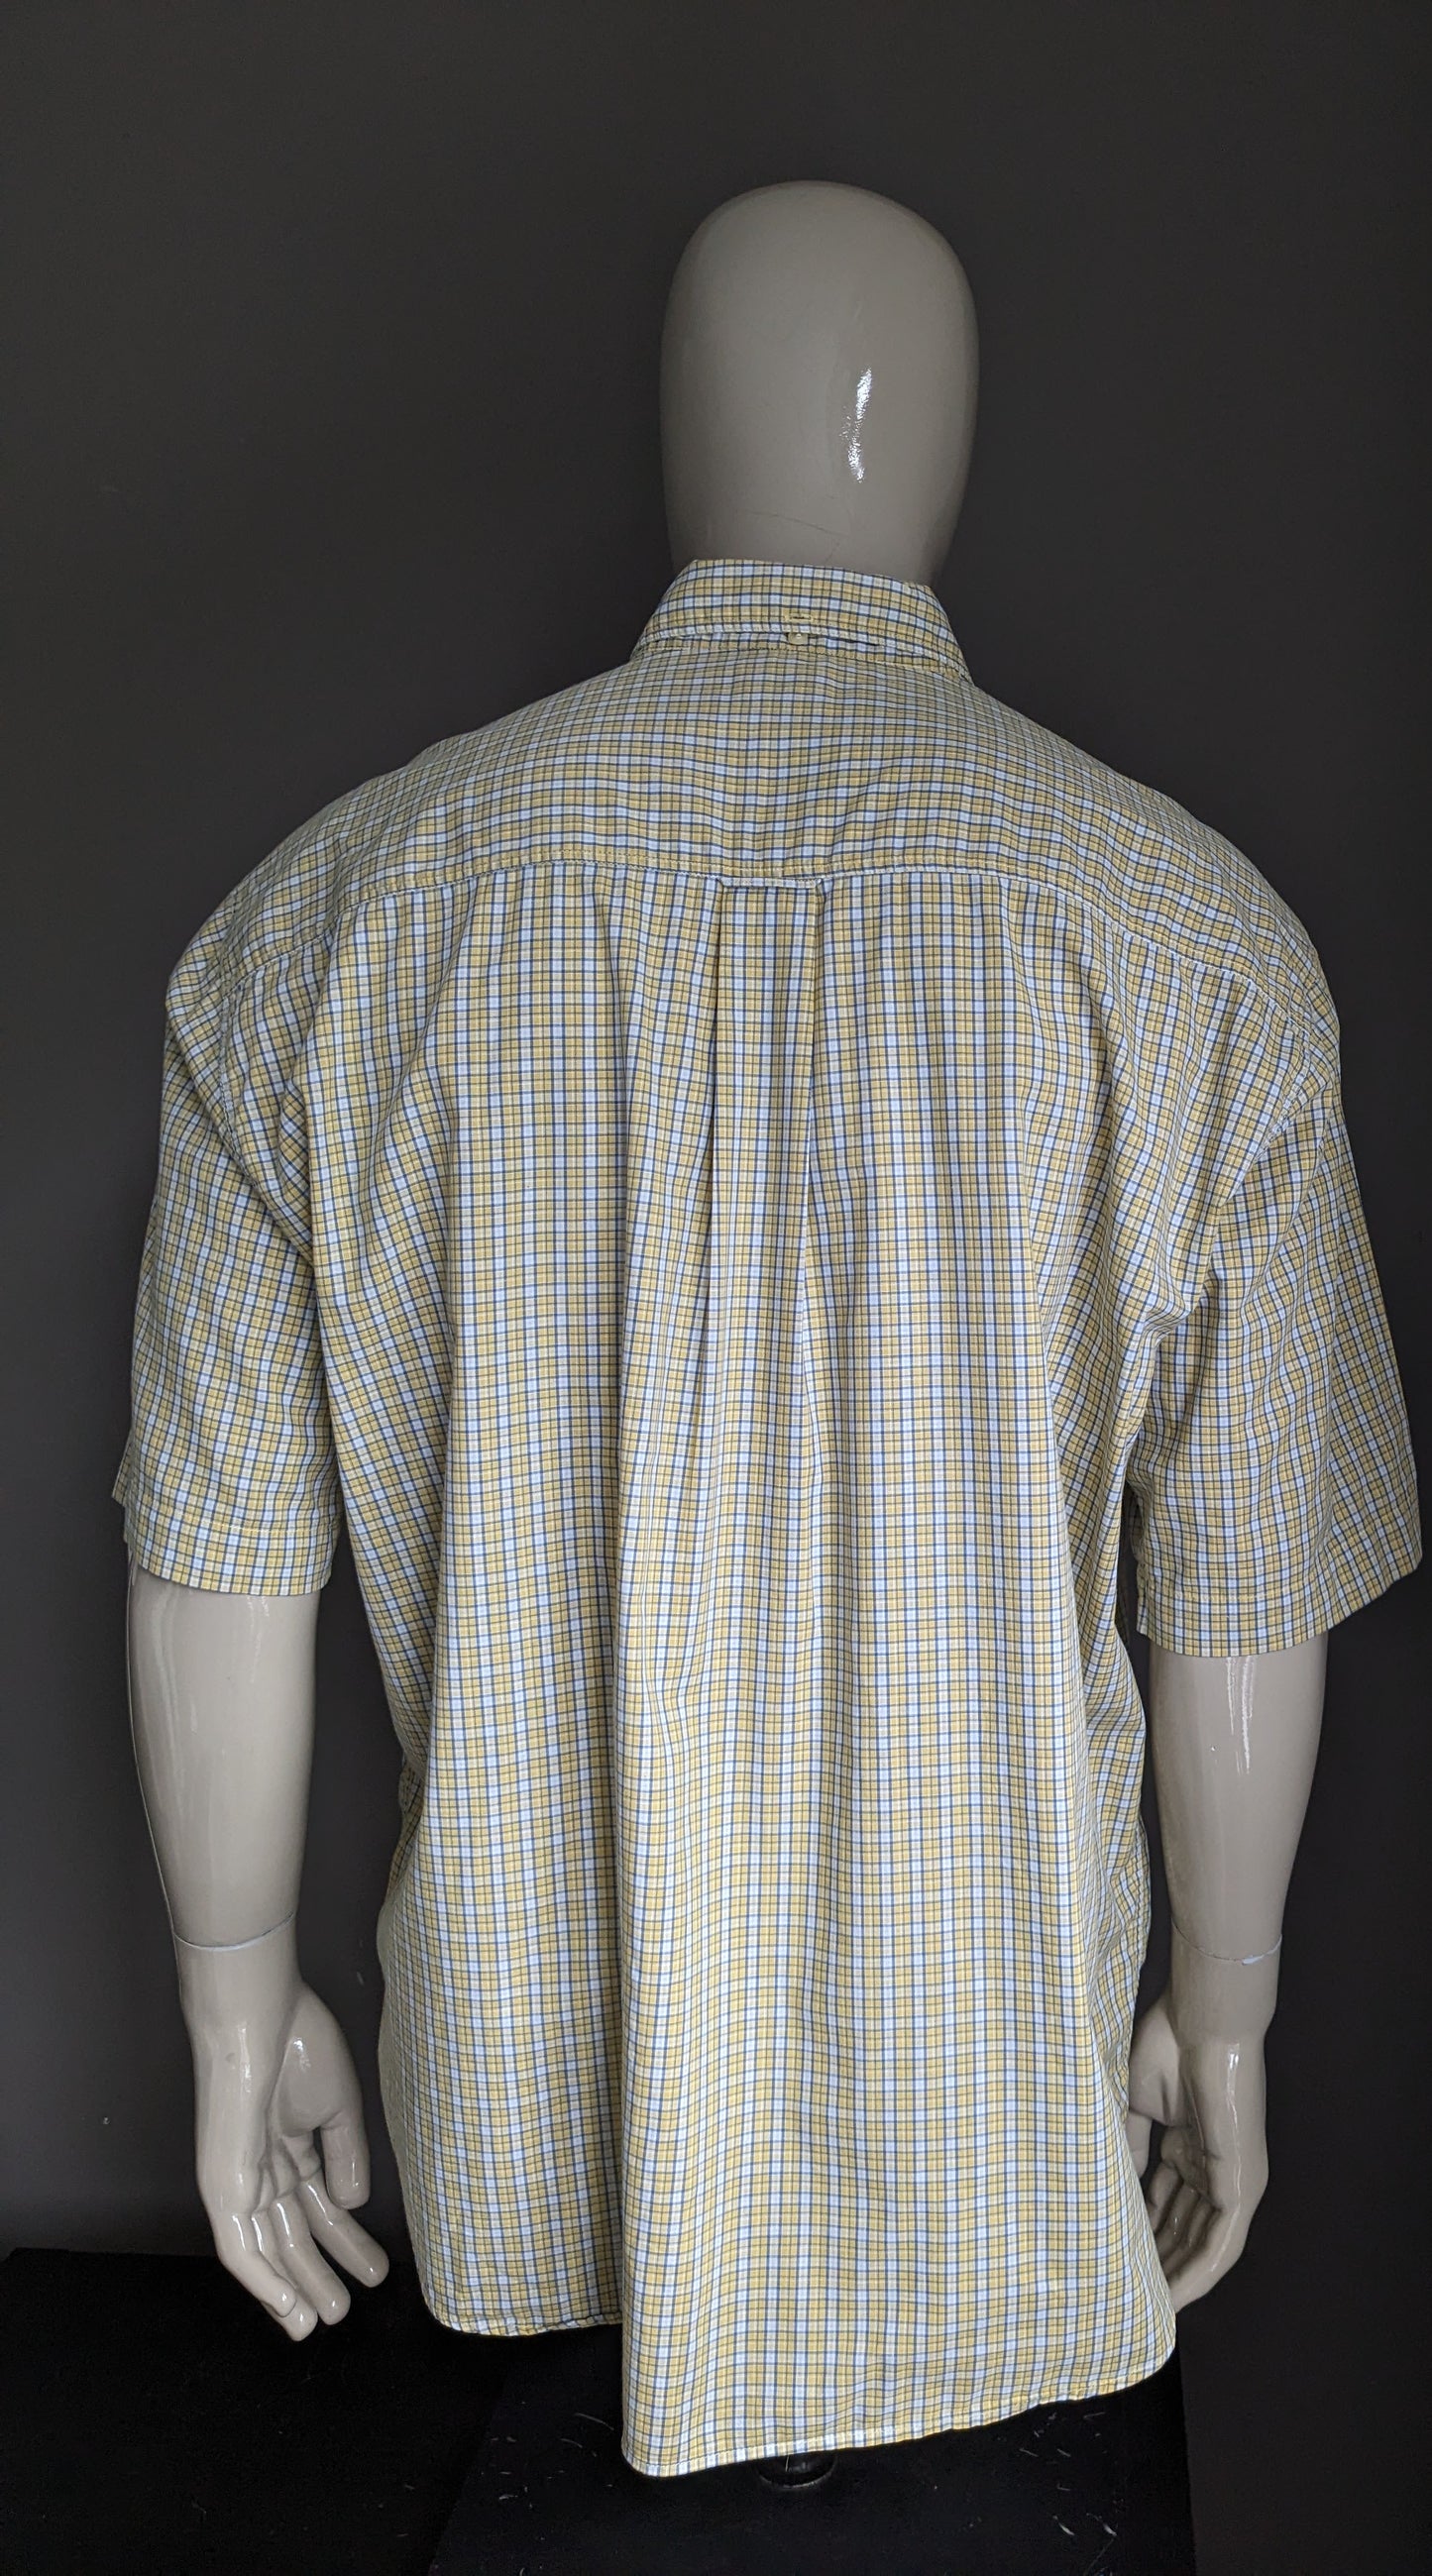 Burton Menswear Shirt short sleeve. Yellow blue white checkered. Size XXL / 2XL.